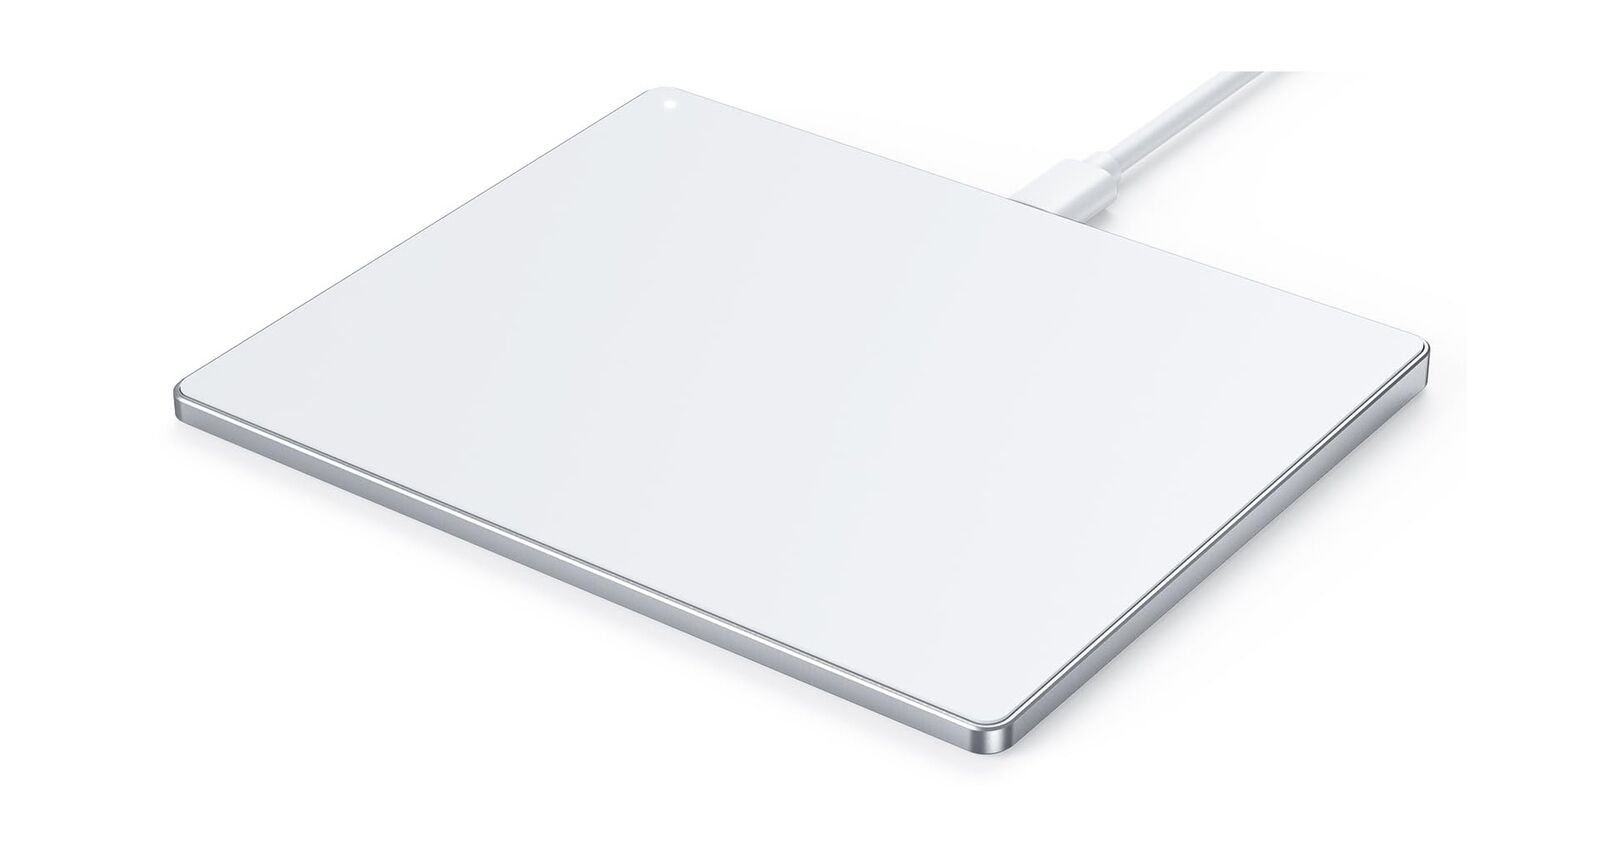 seenda Trackpad, External USB Touchpad High Precision Aluminum Track Pad with...